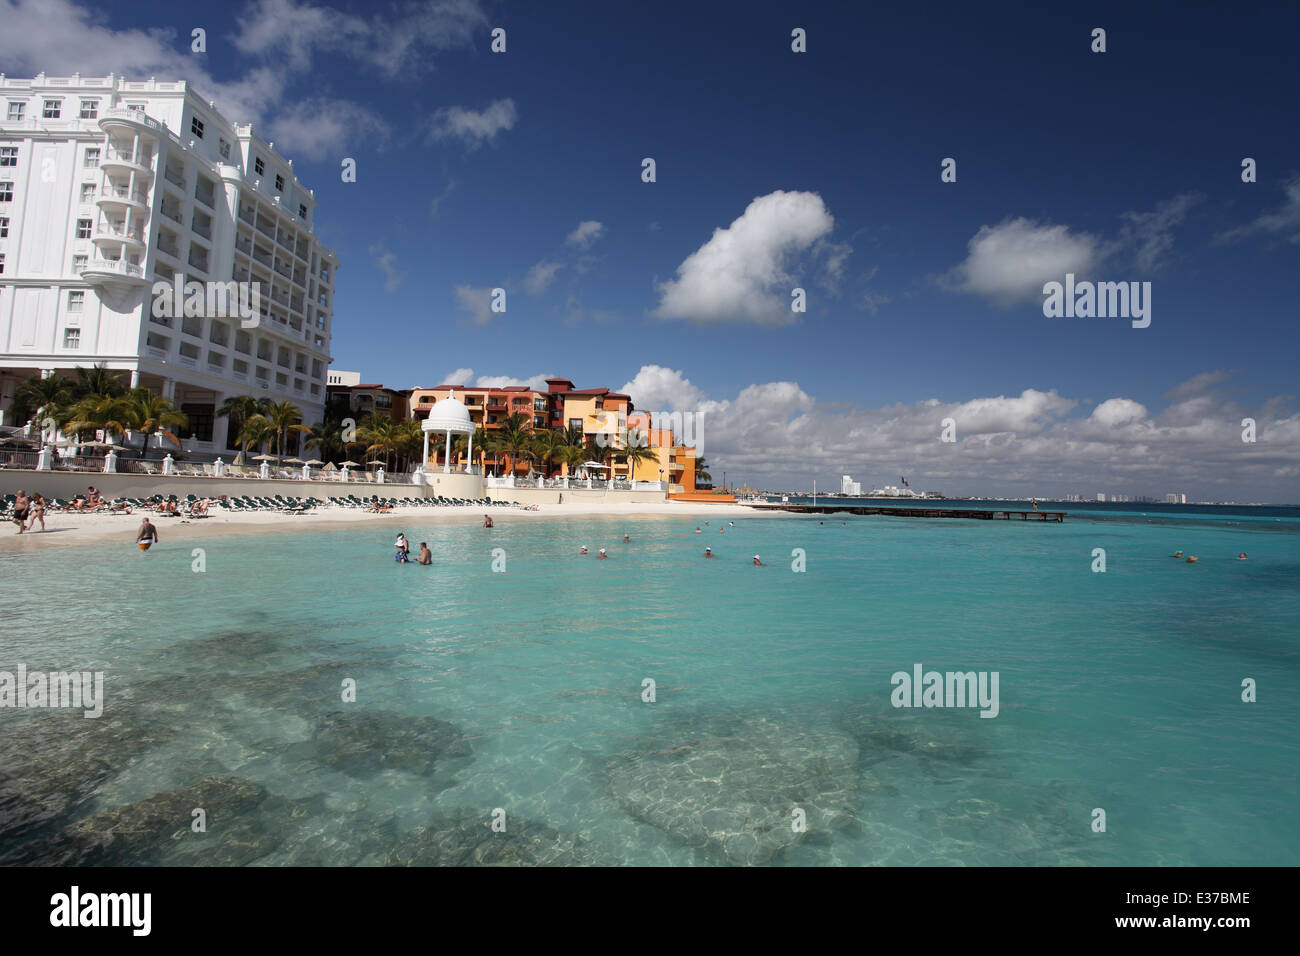 Hotel Riu Palace Las Americas, Cancun, Yucatan Peninsula, Mexico Stock Photo